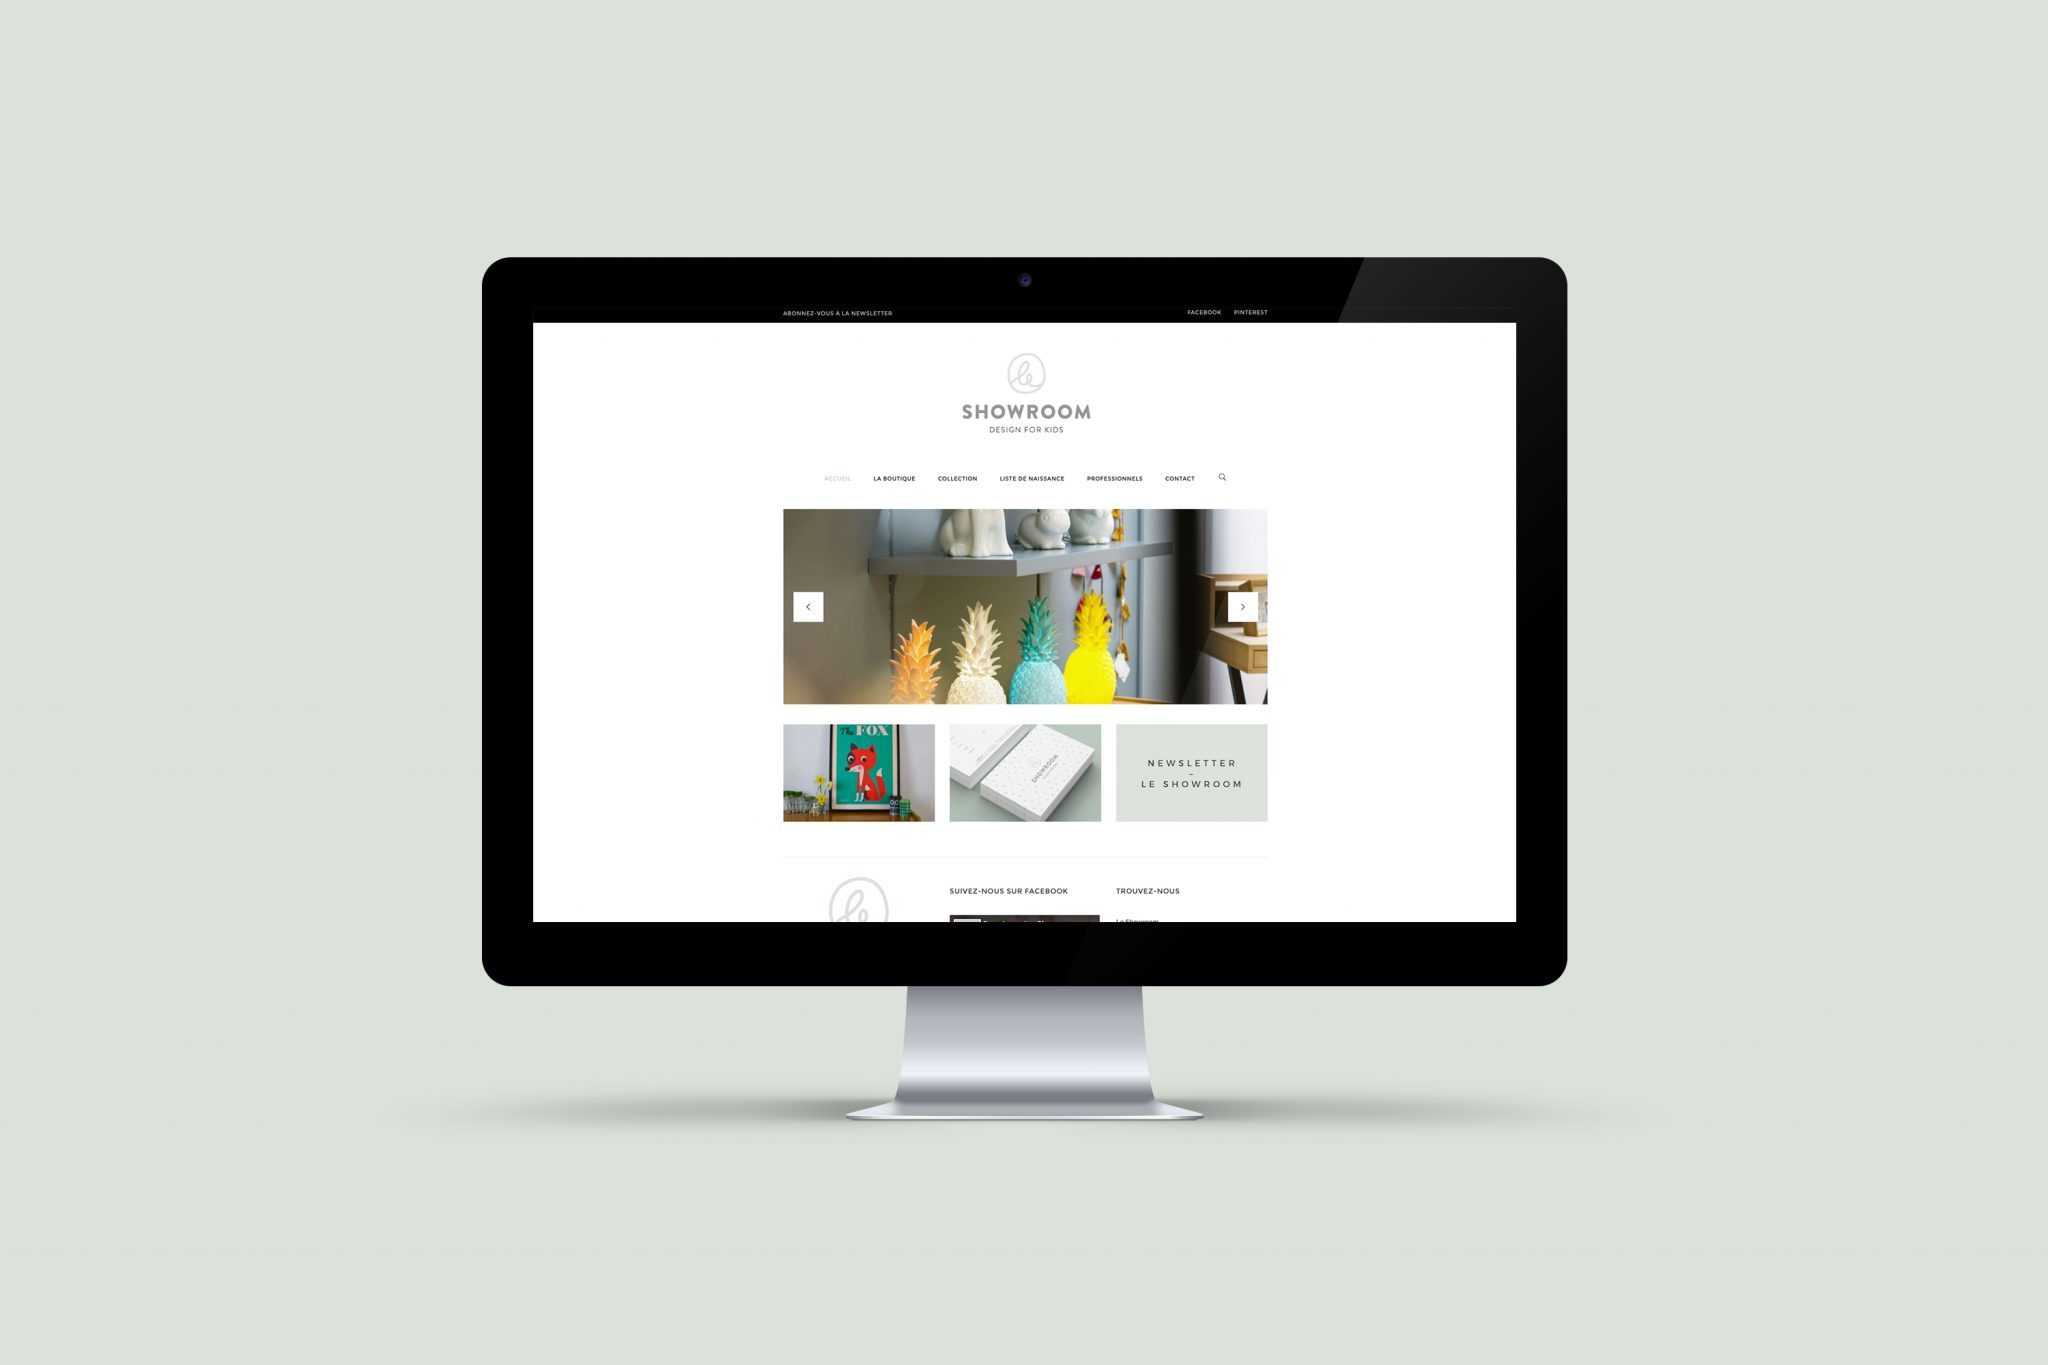 le-showroom-site-web-design